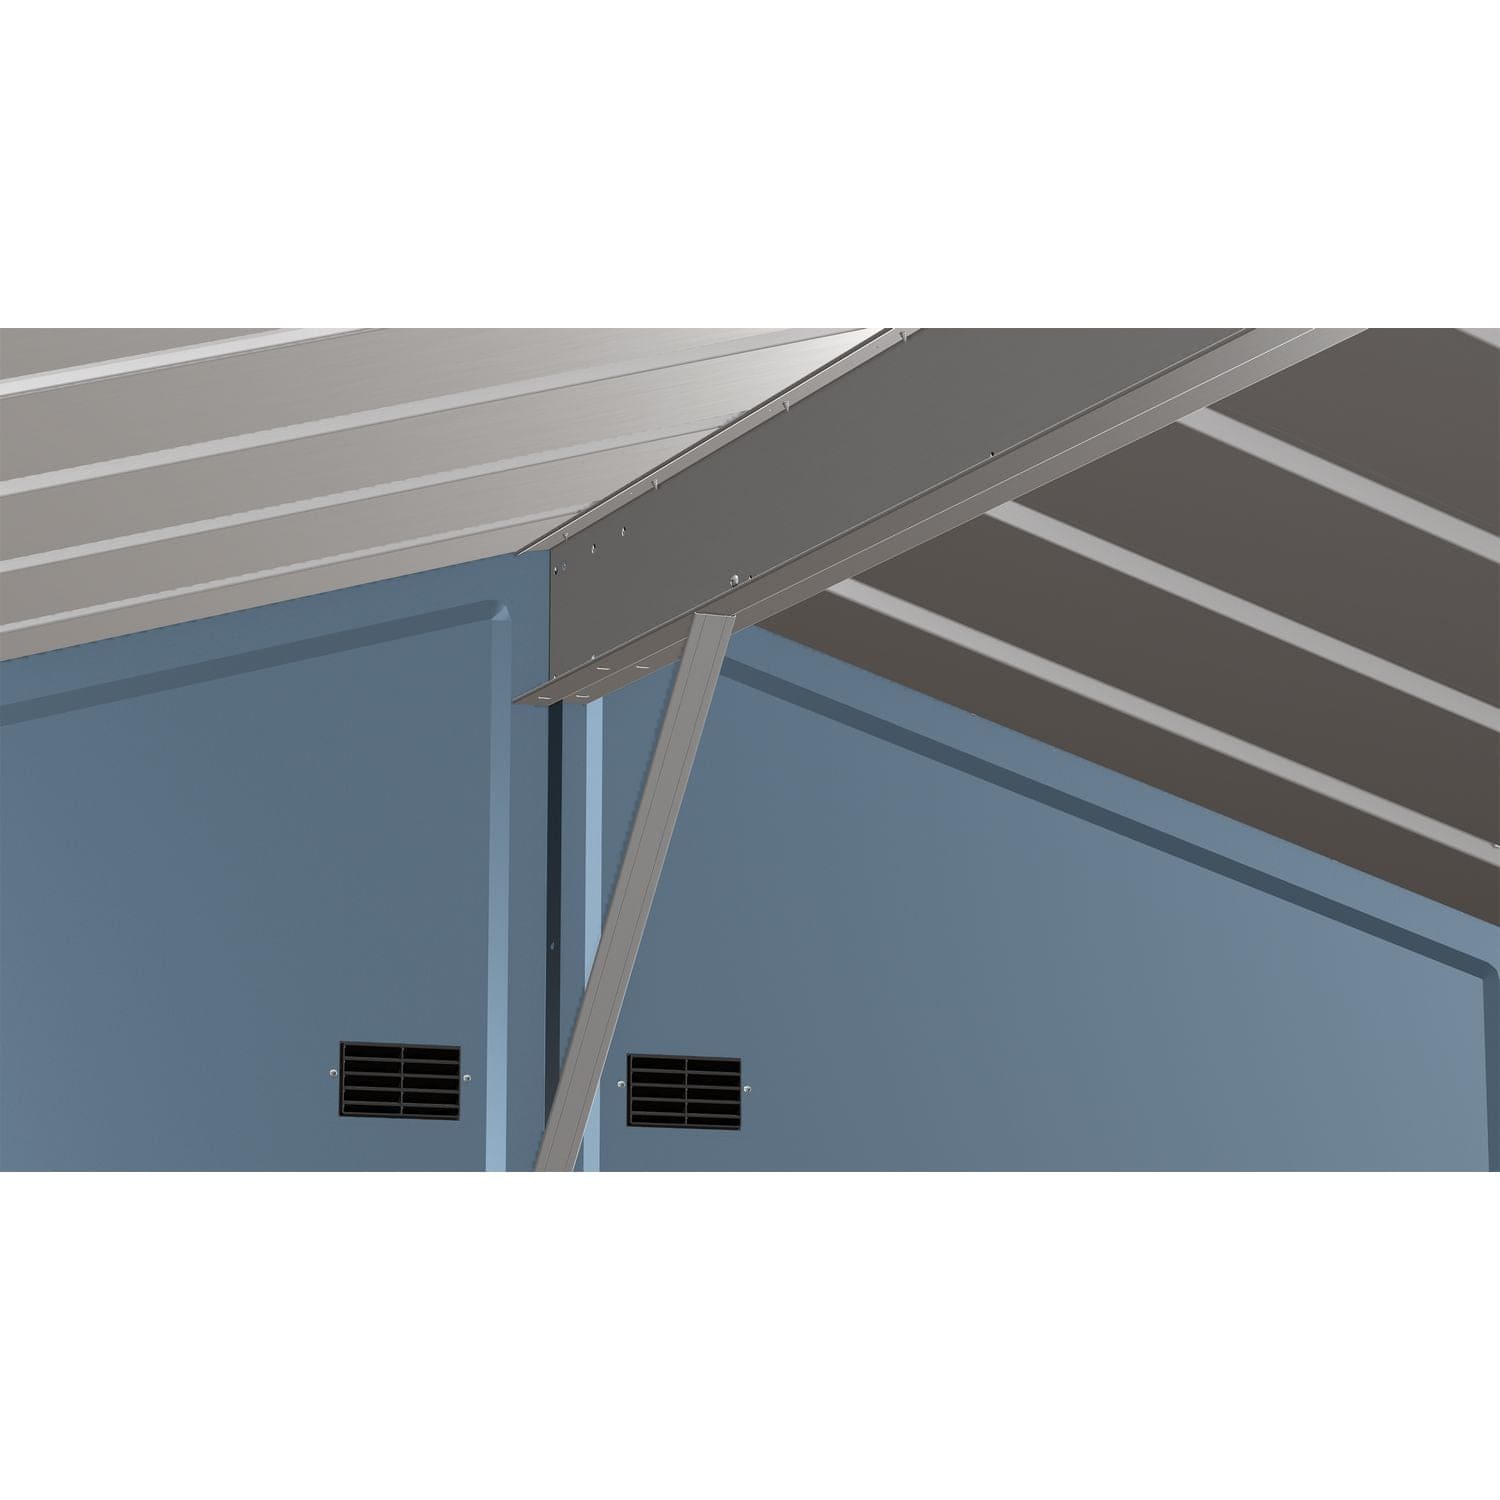 Arrow Sheds & Storage Buildings Arrow | Select Gable Roof Steel Storage Shed, 6x7 ft., Blue Grey SCG67BG